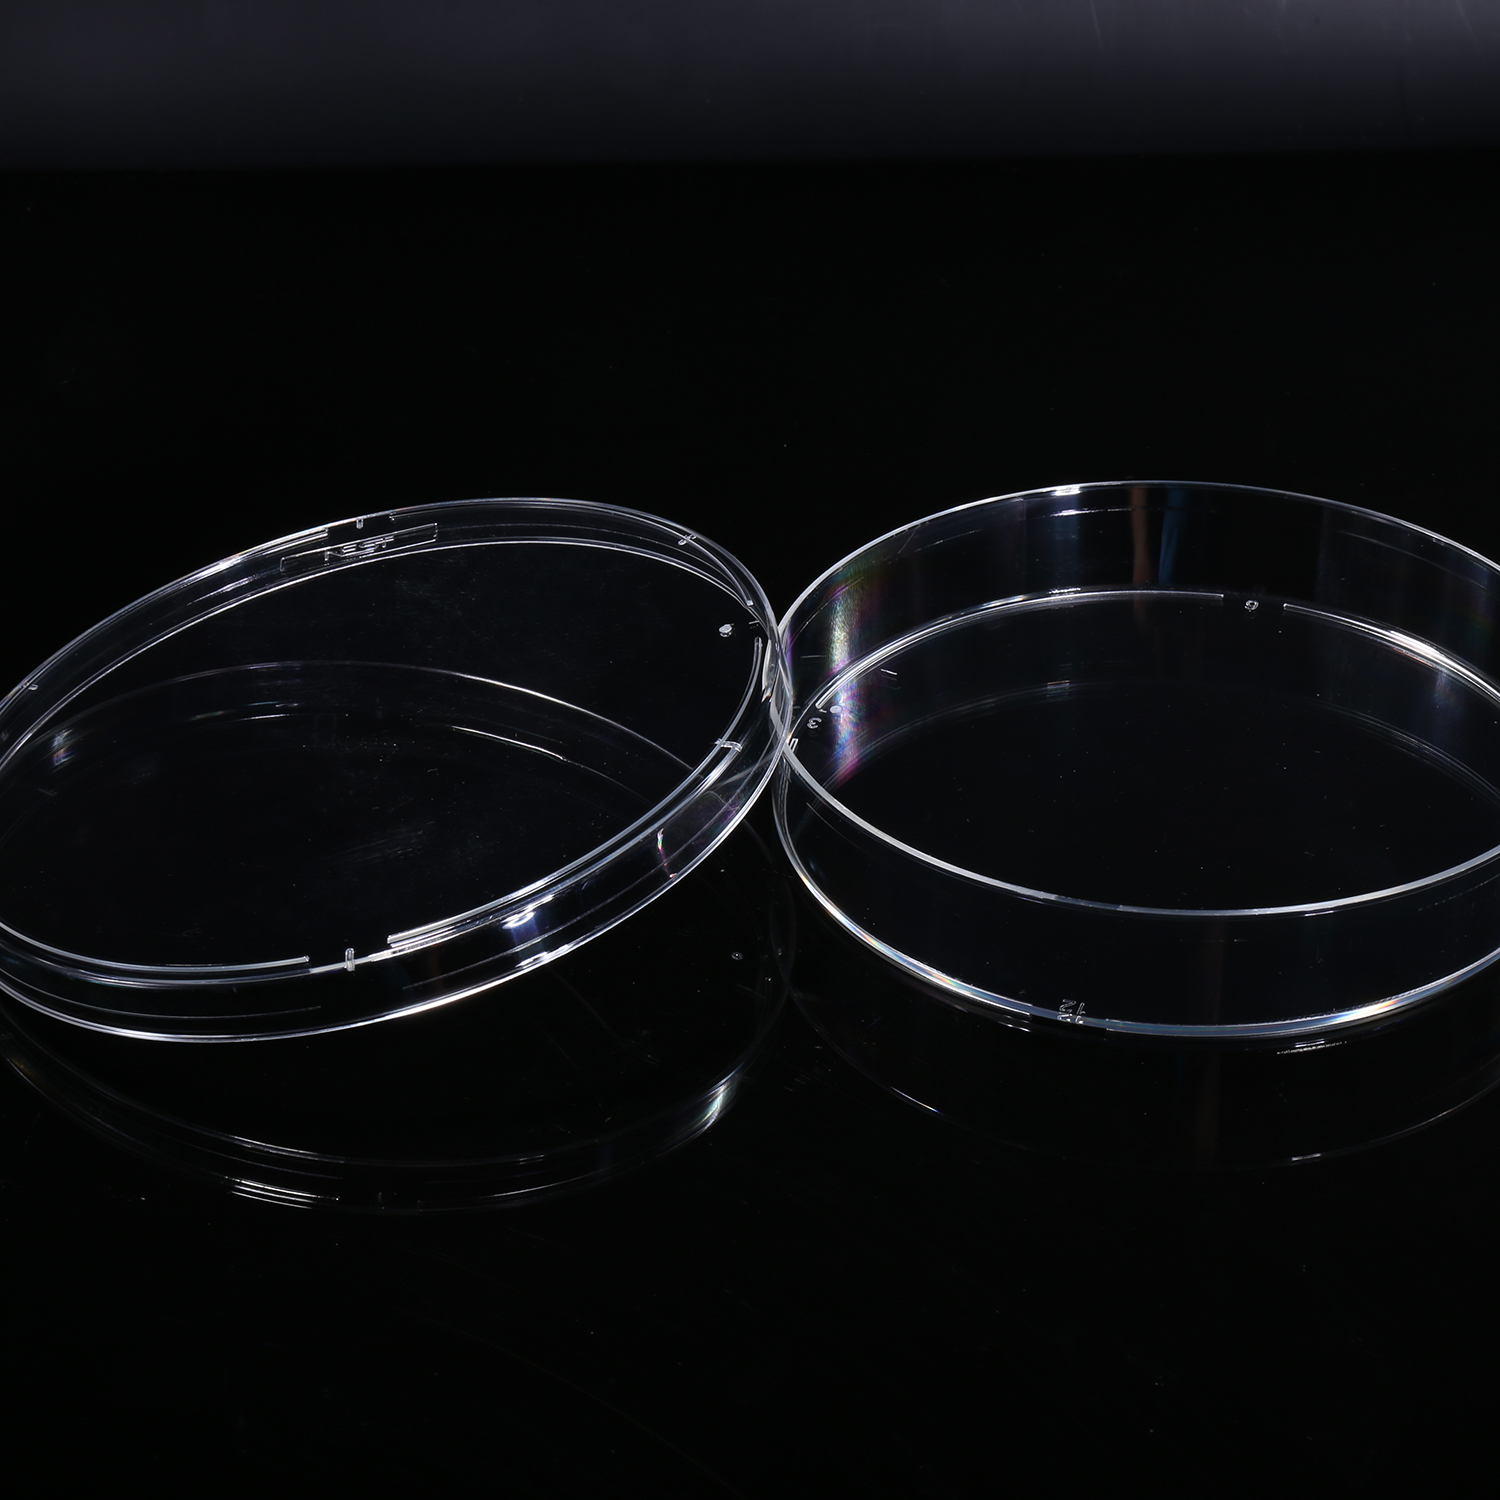 100 mm 细胞培养皿，TC